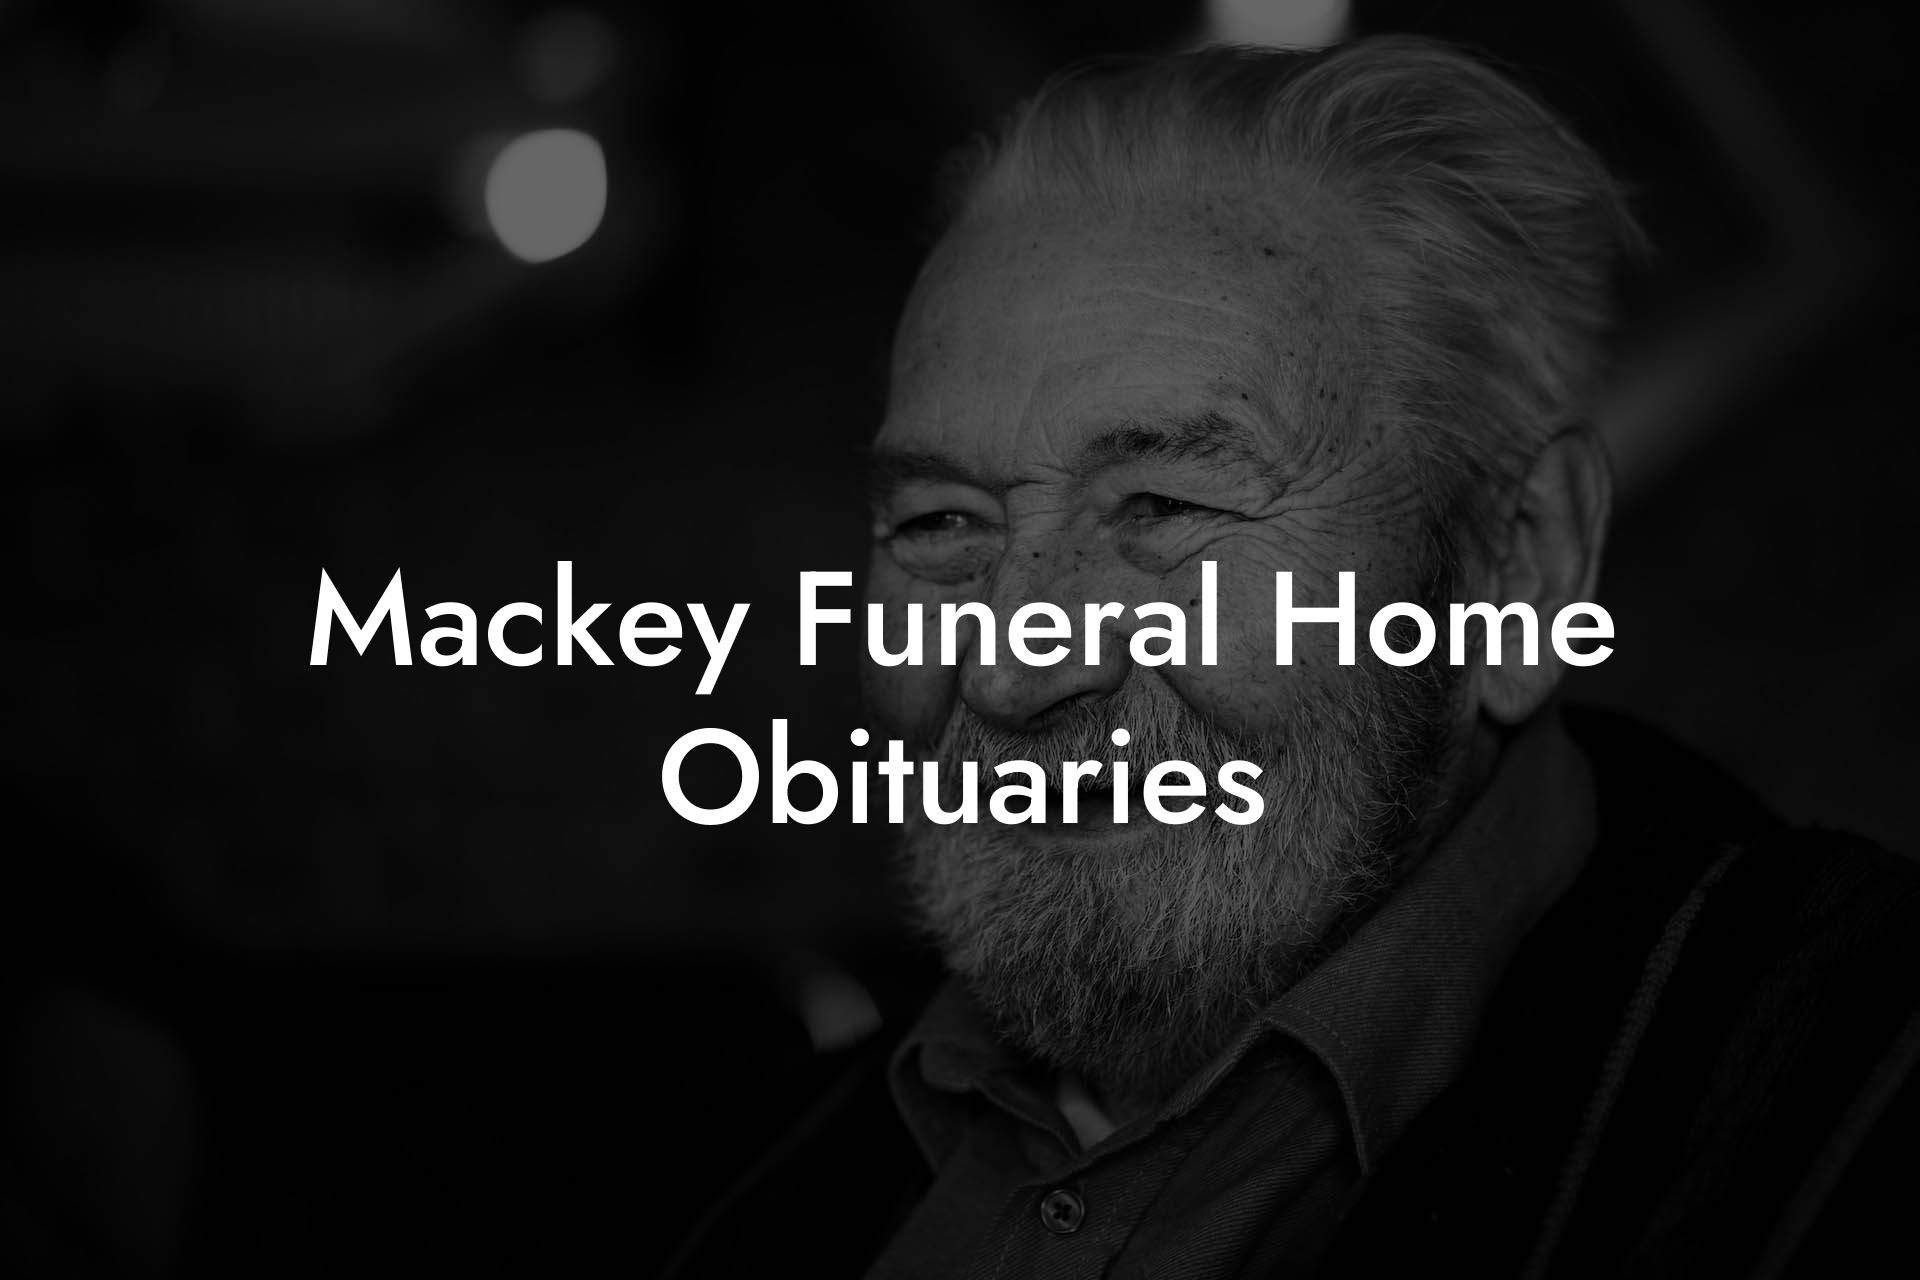 Mackey Funeral Home Obituaries